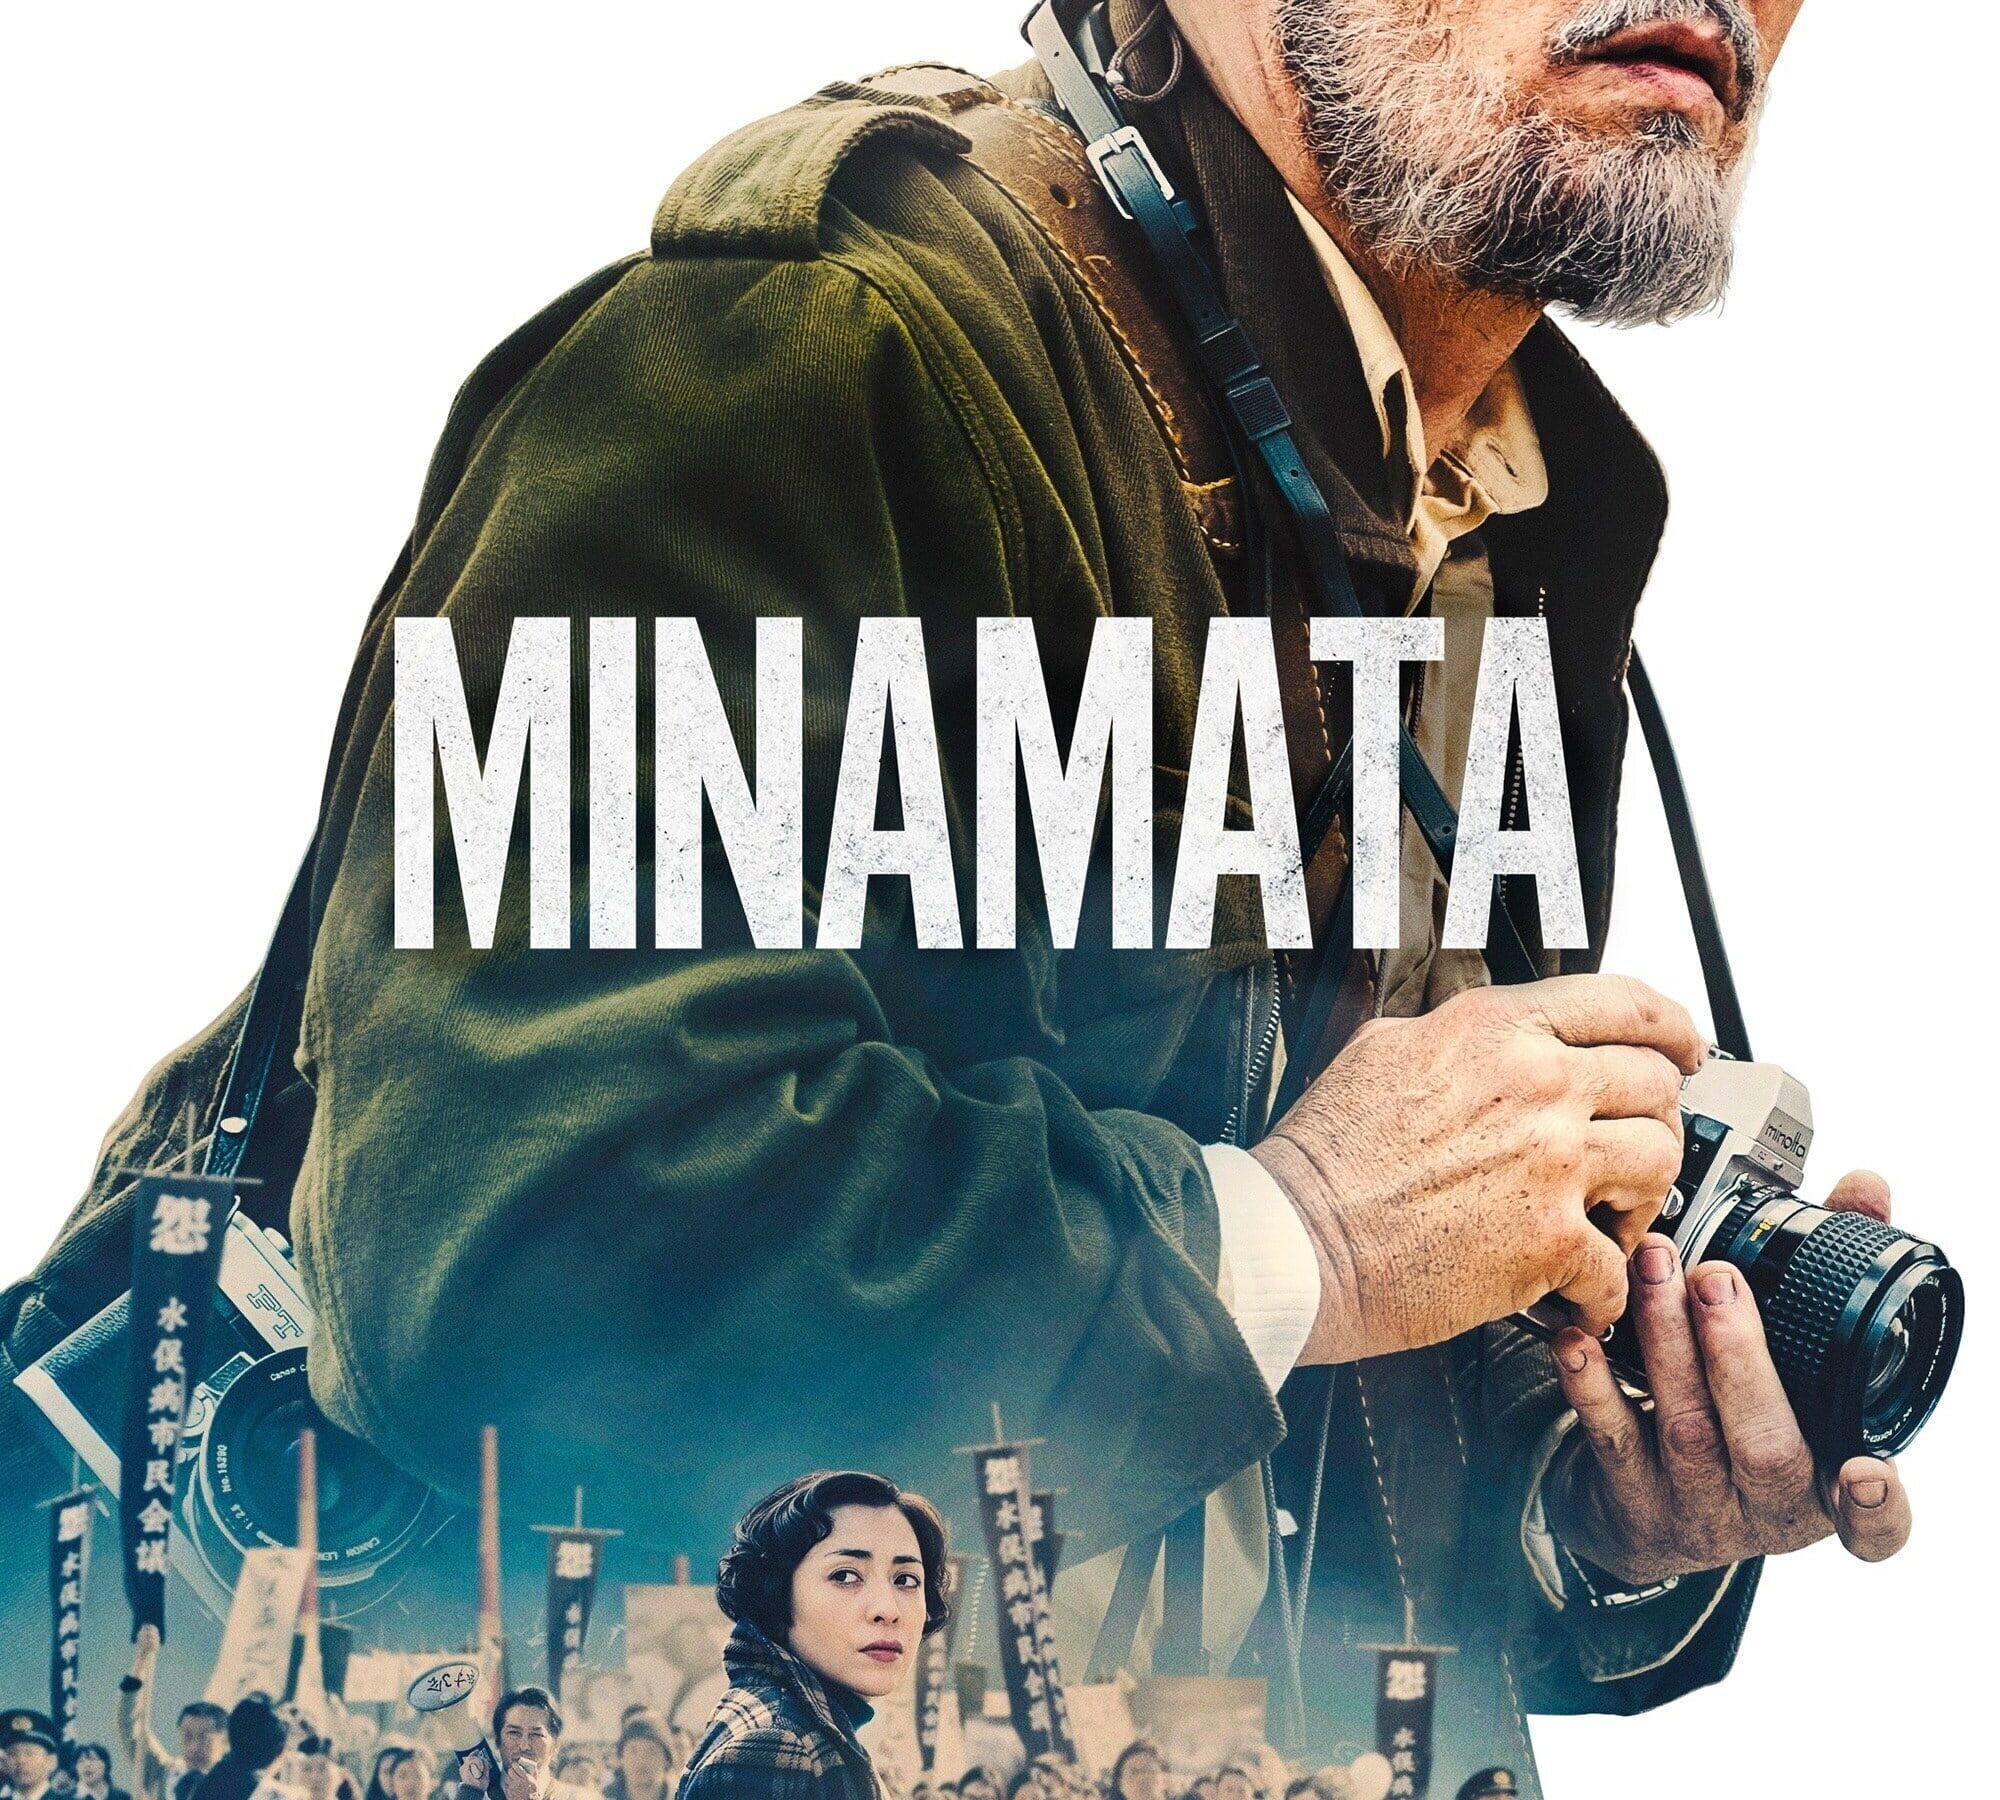 Poster for the movie "Minamata"